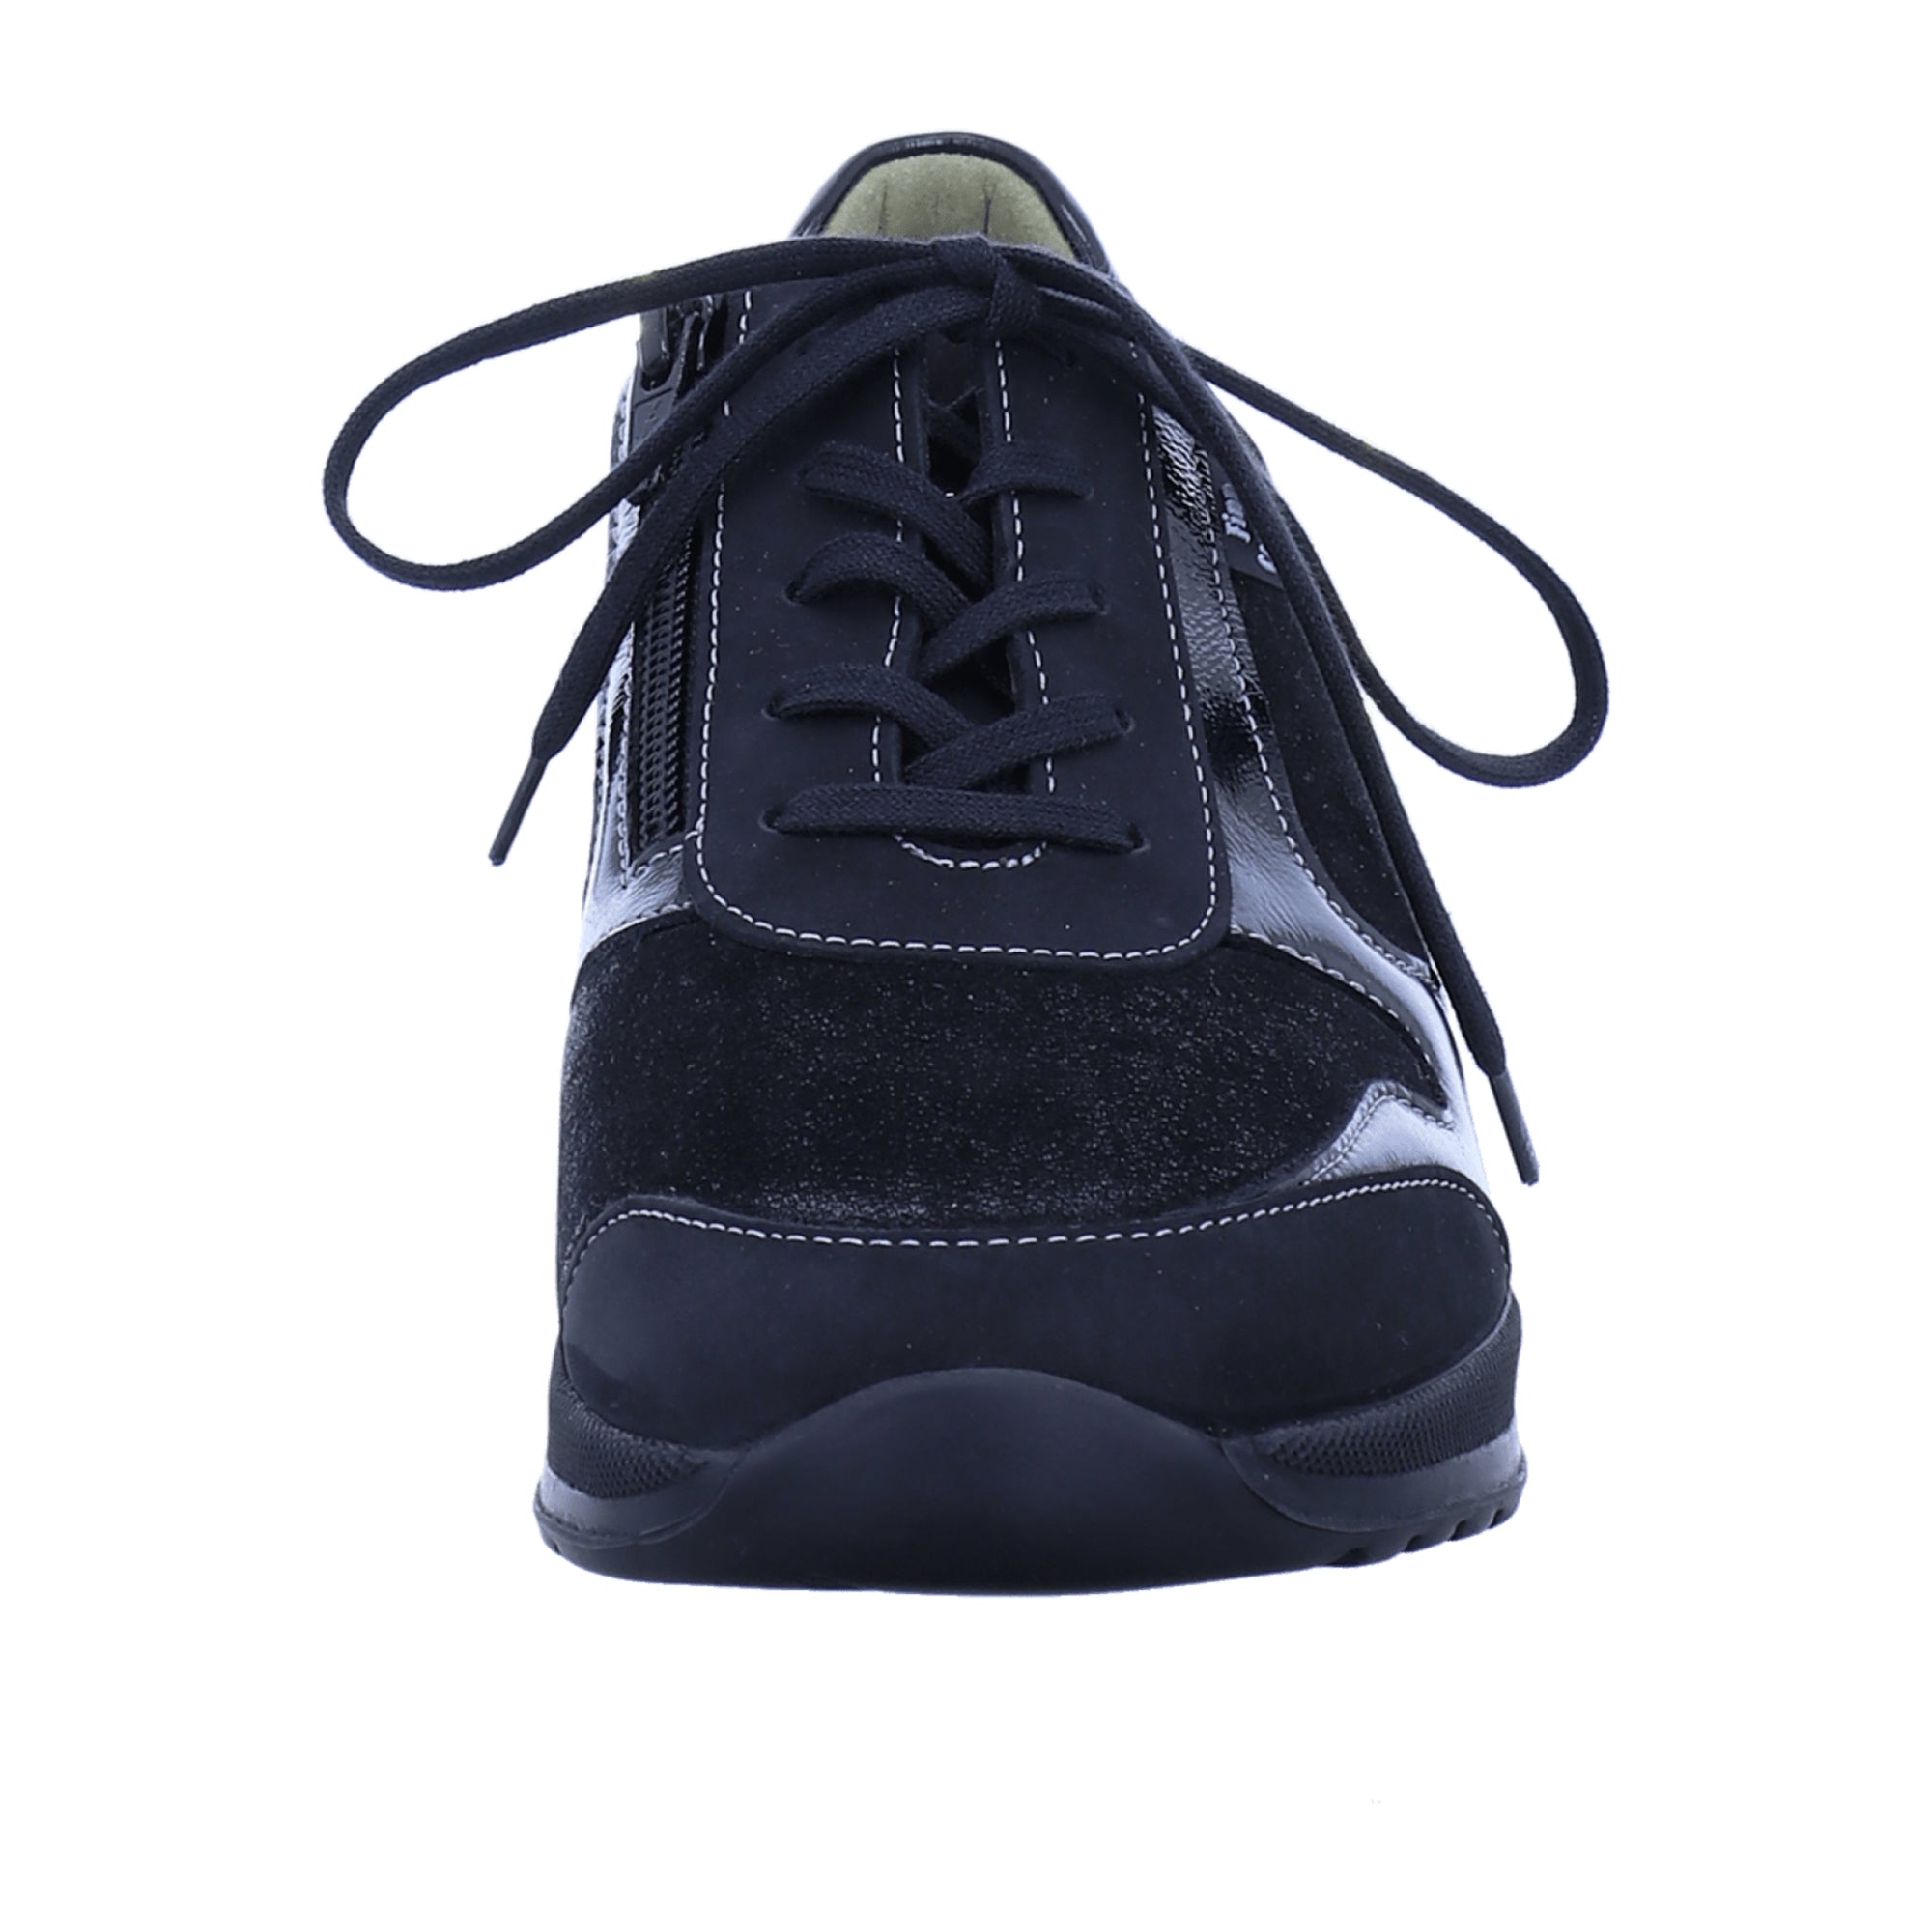 Finn Comfort Mori Women's Black Comfort Shoes - Stylish & Durable